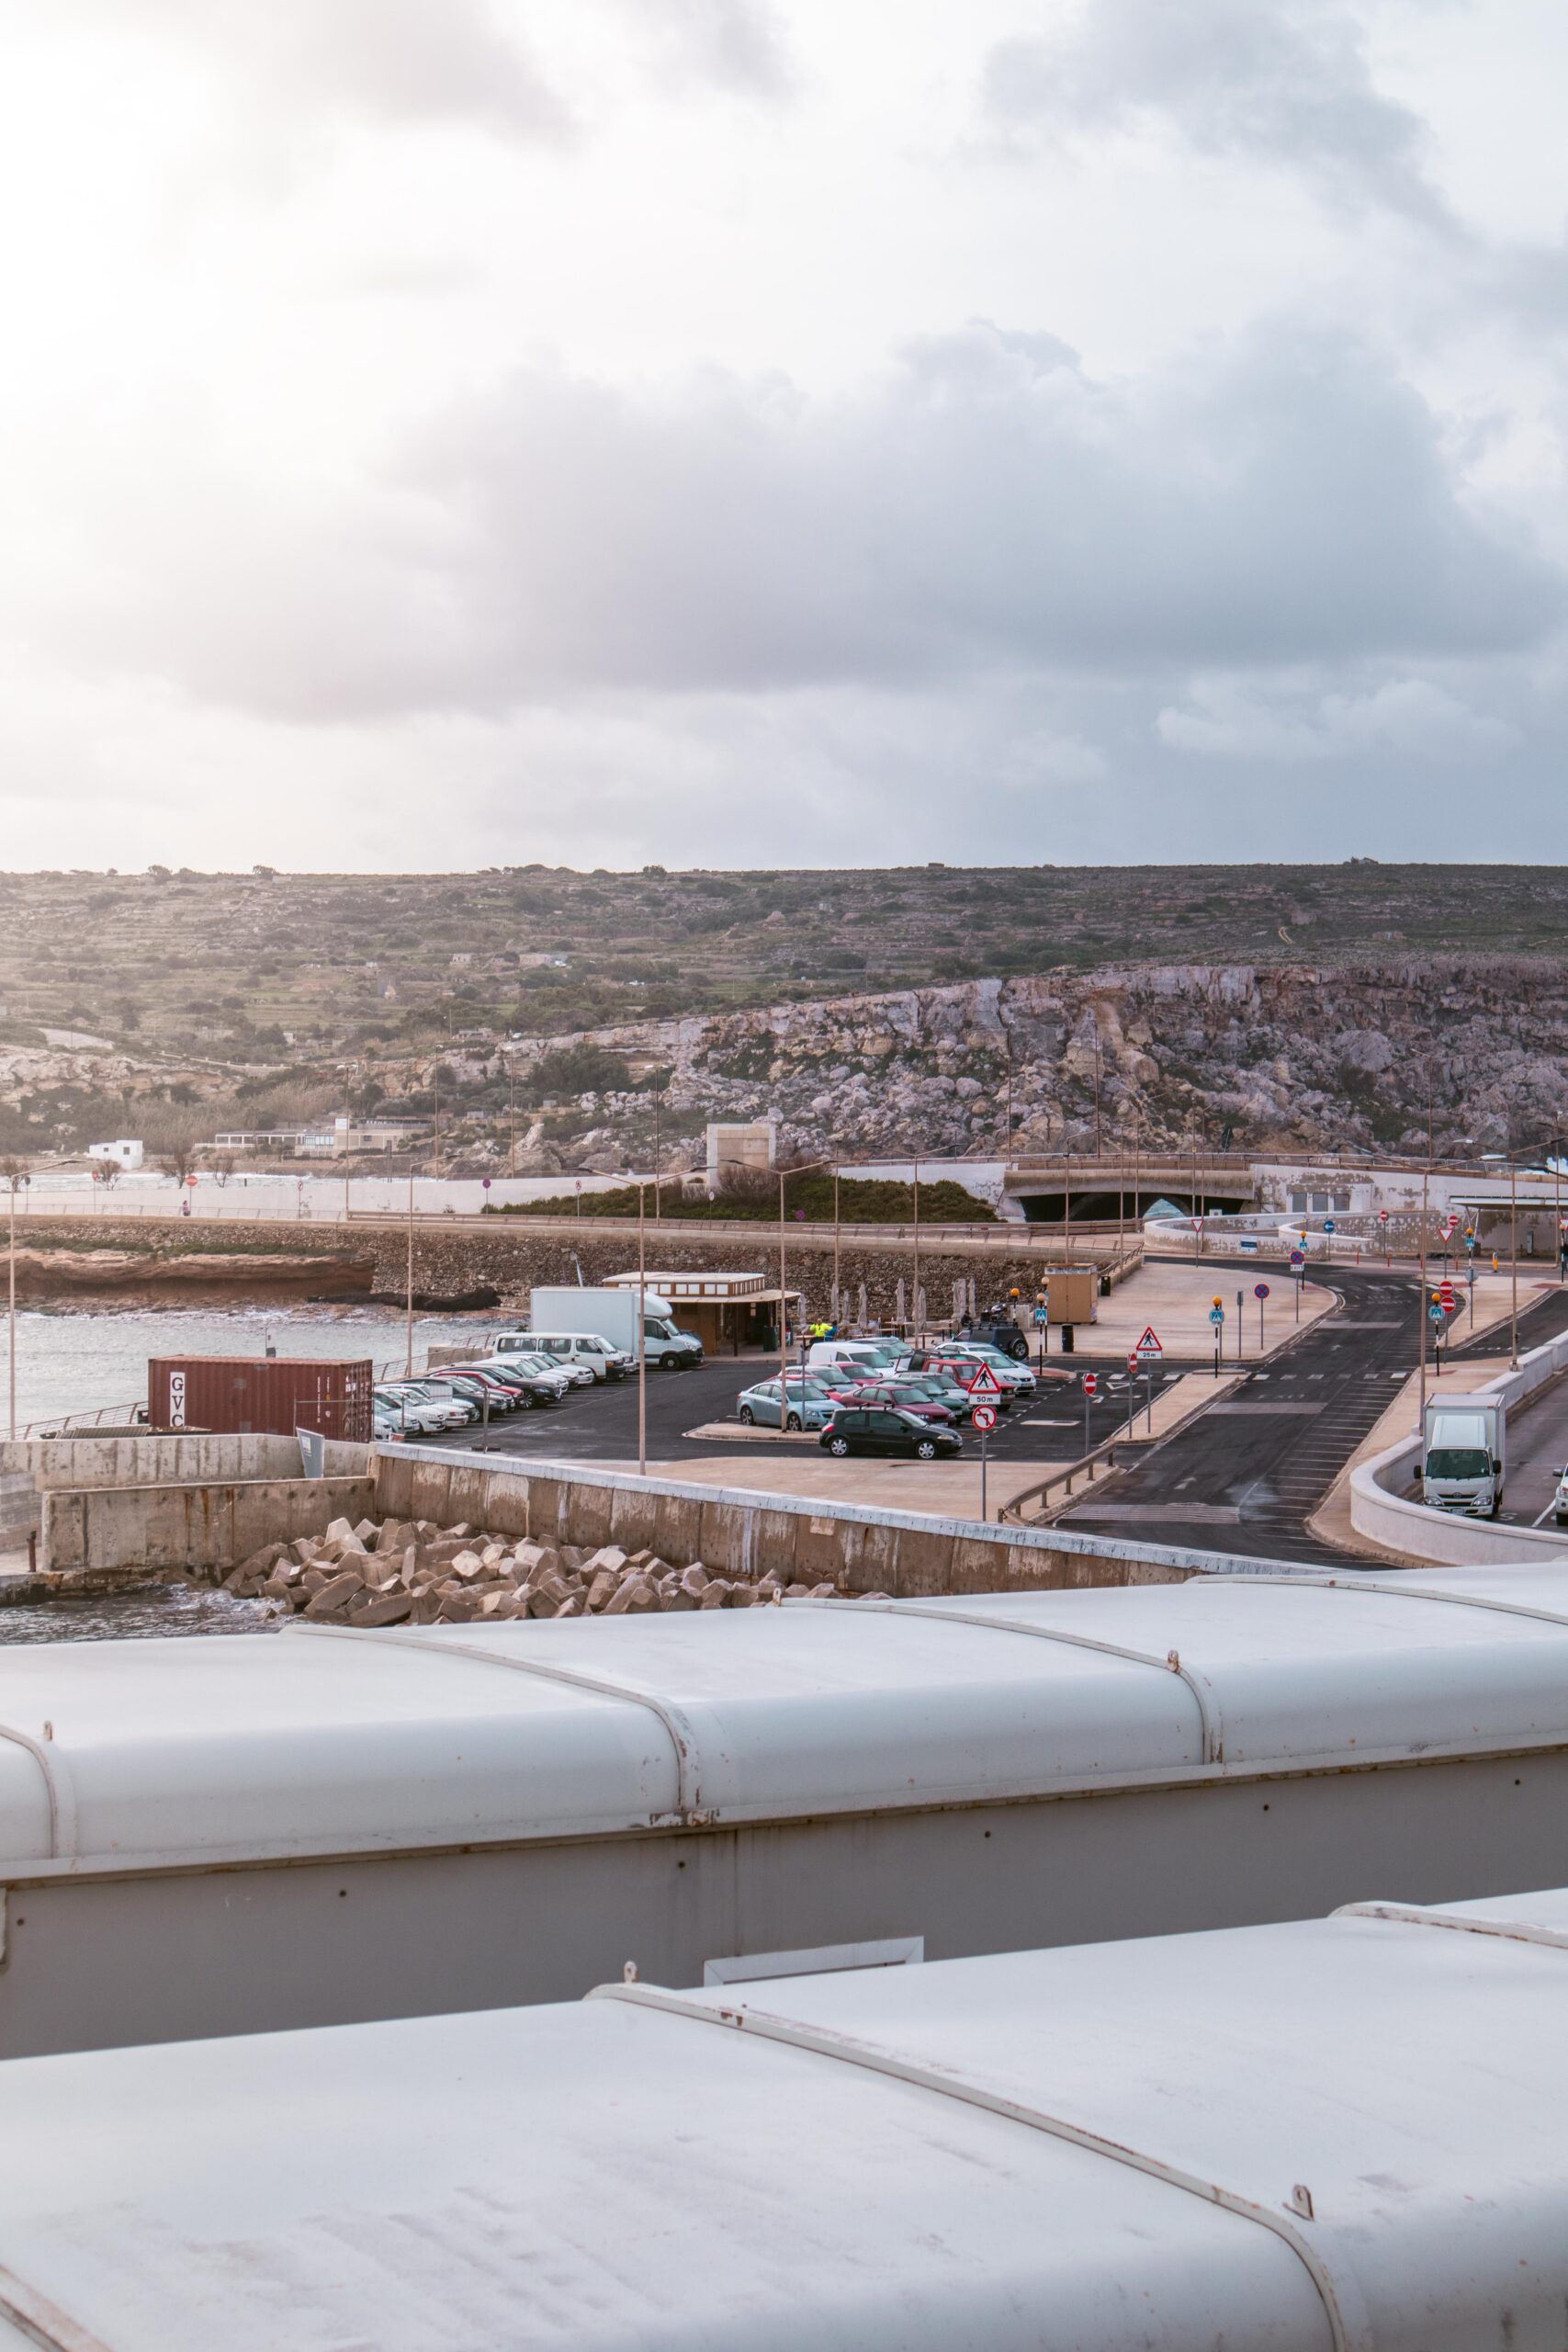 Ċirkewwa ferry terminal as seen from Gozo Channel Ferry, Malta